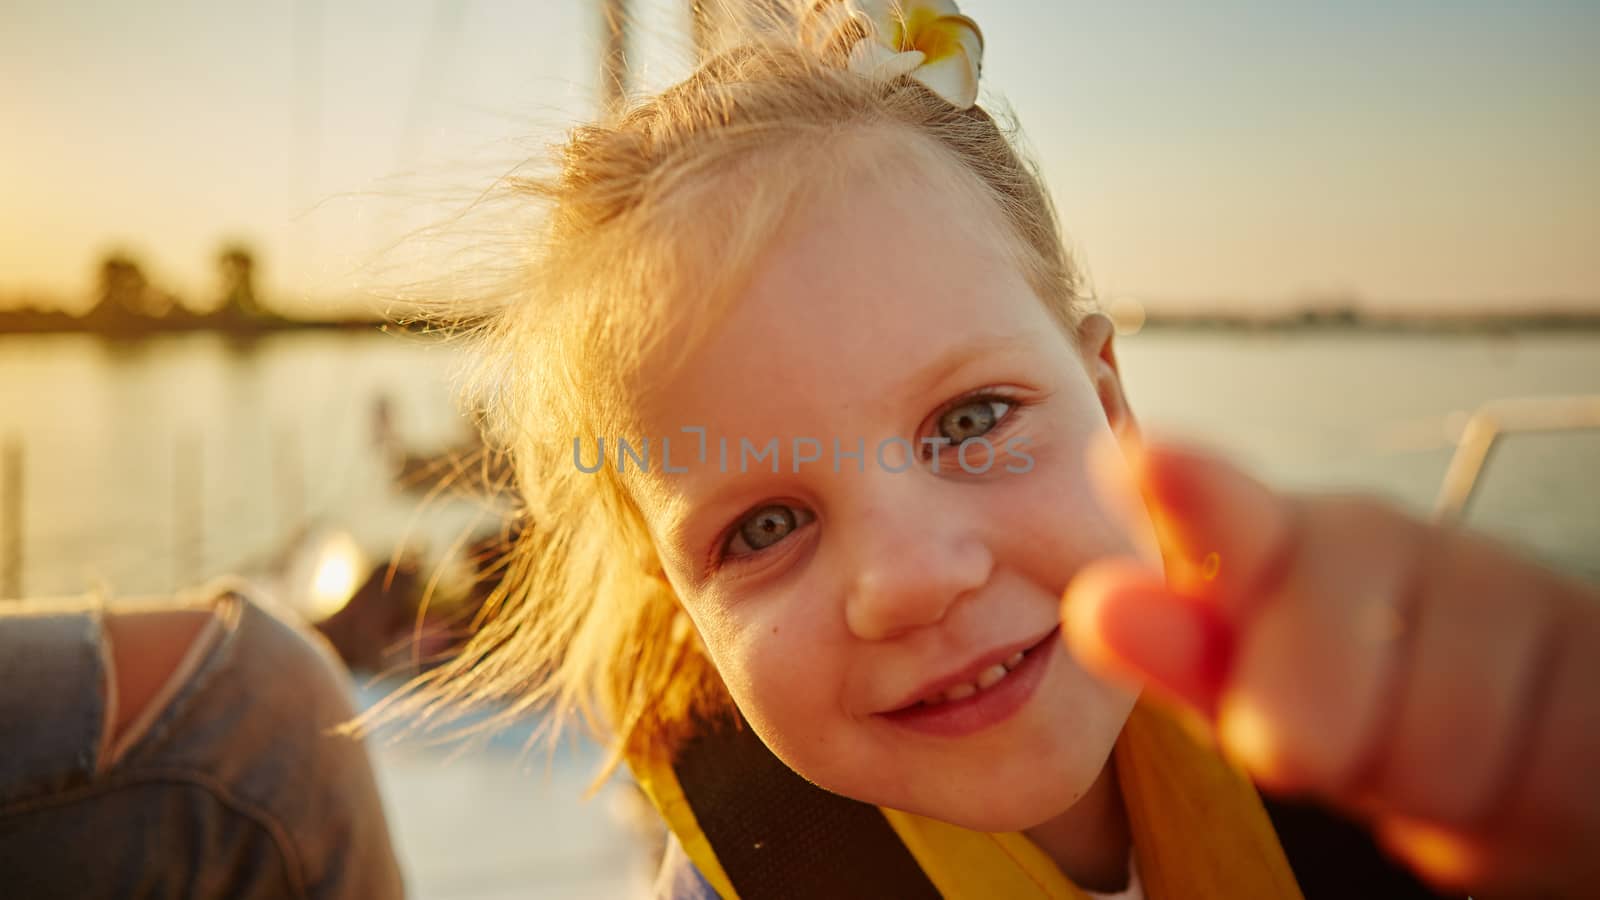 Little girl enjoying ride on yacht at sunset